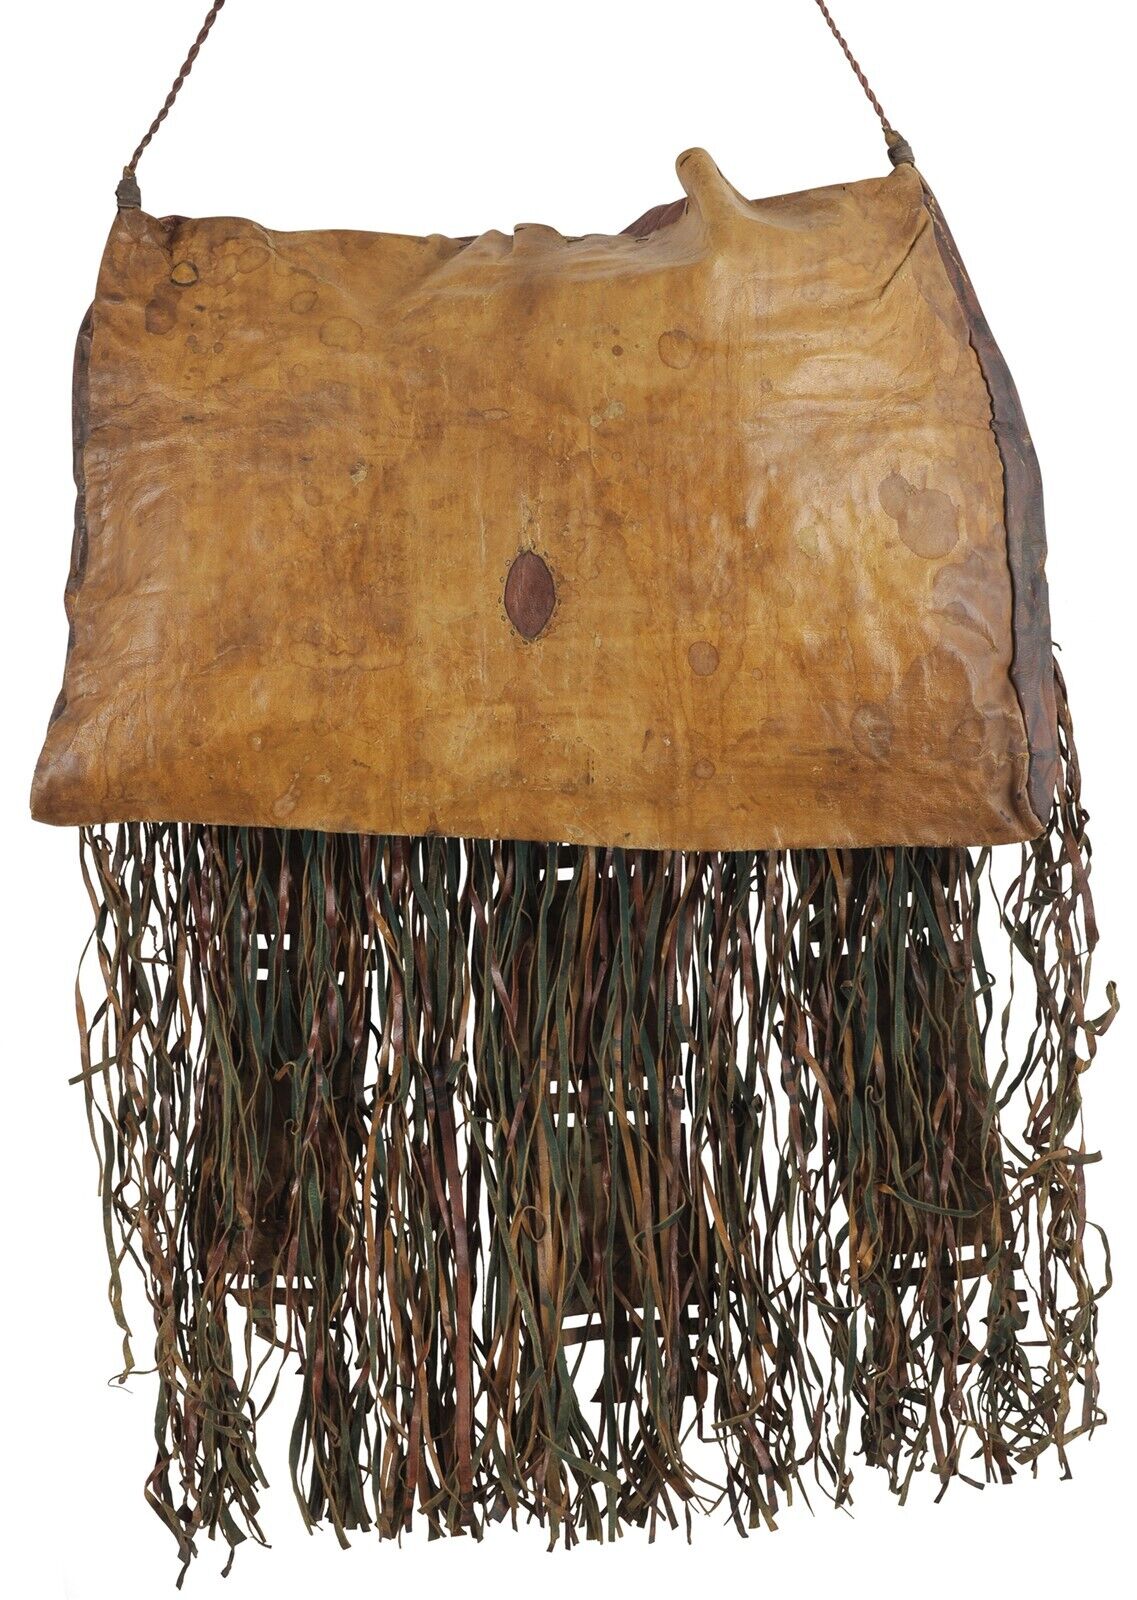 Tuareg leather camel bag Niger Peul Fula African Sahara - Tribalgh